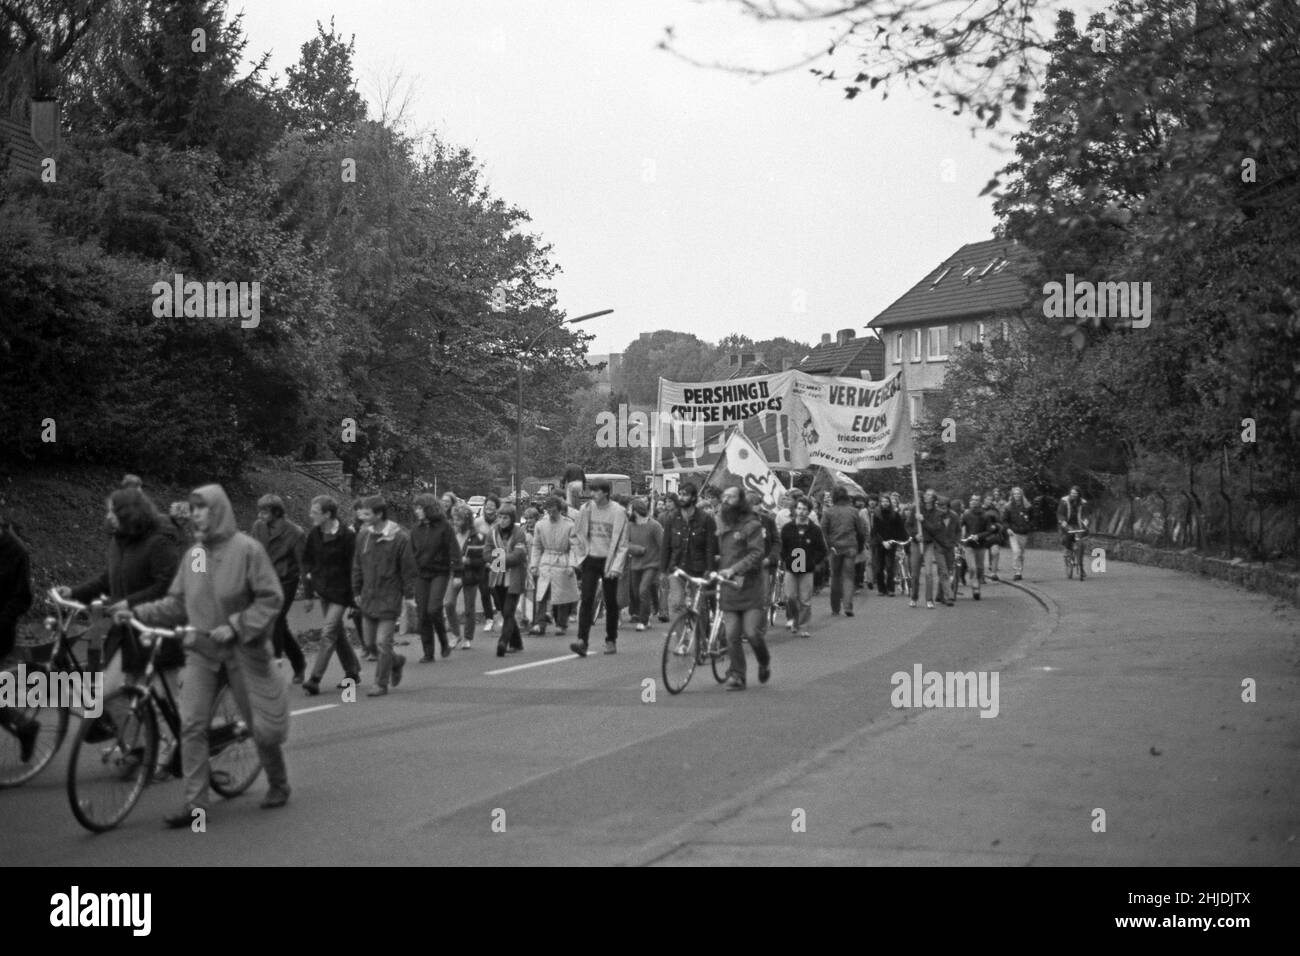 Manifestazione contro i missili Pershing II, 22 ottobre 1983, Dortmund, Renania settentrionale-Wesfalia, Germania Foto Stock